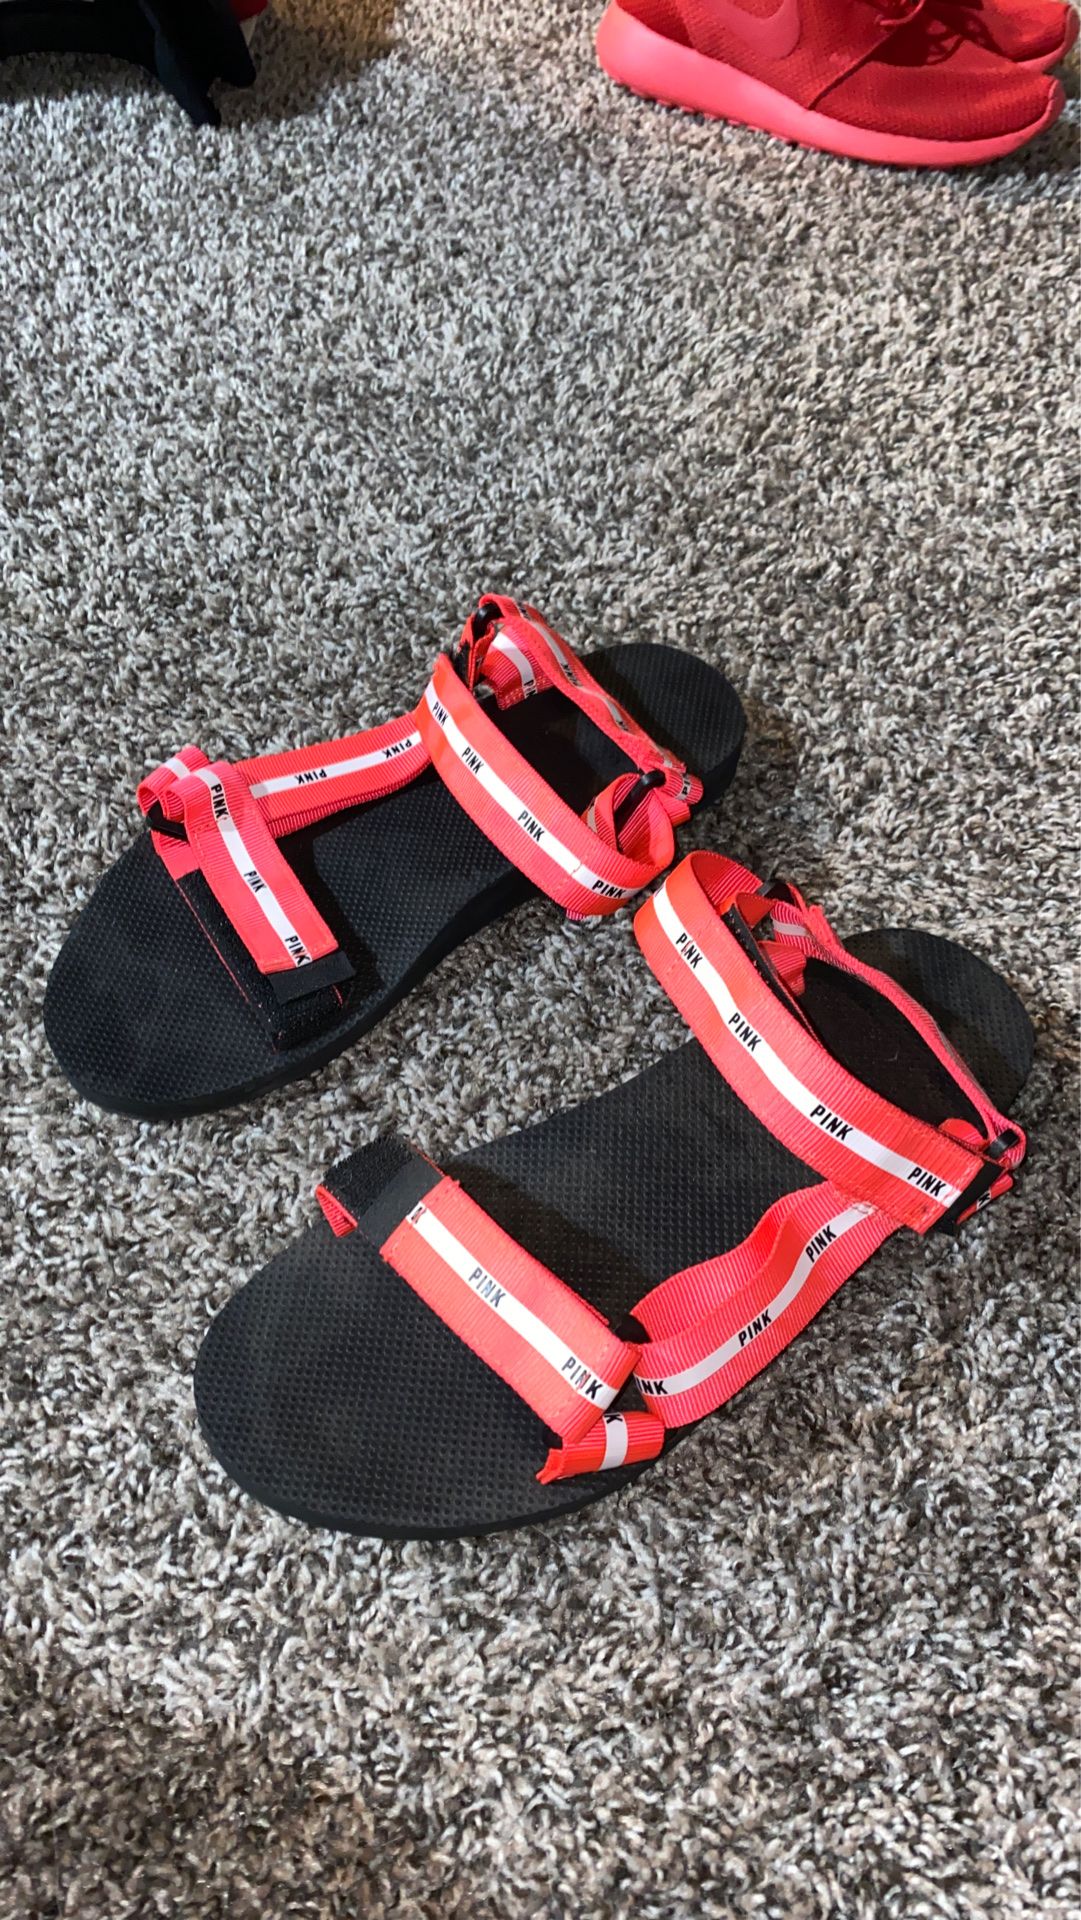 Victoria’s Secret sandals